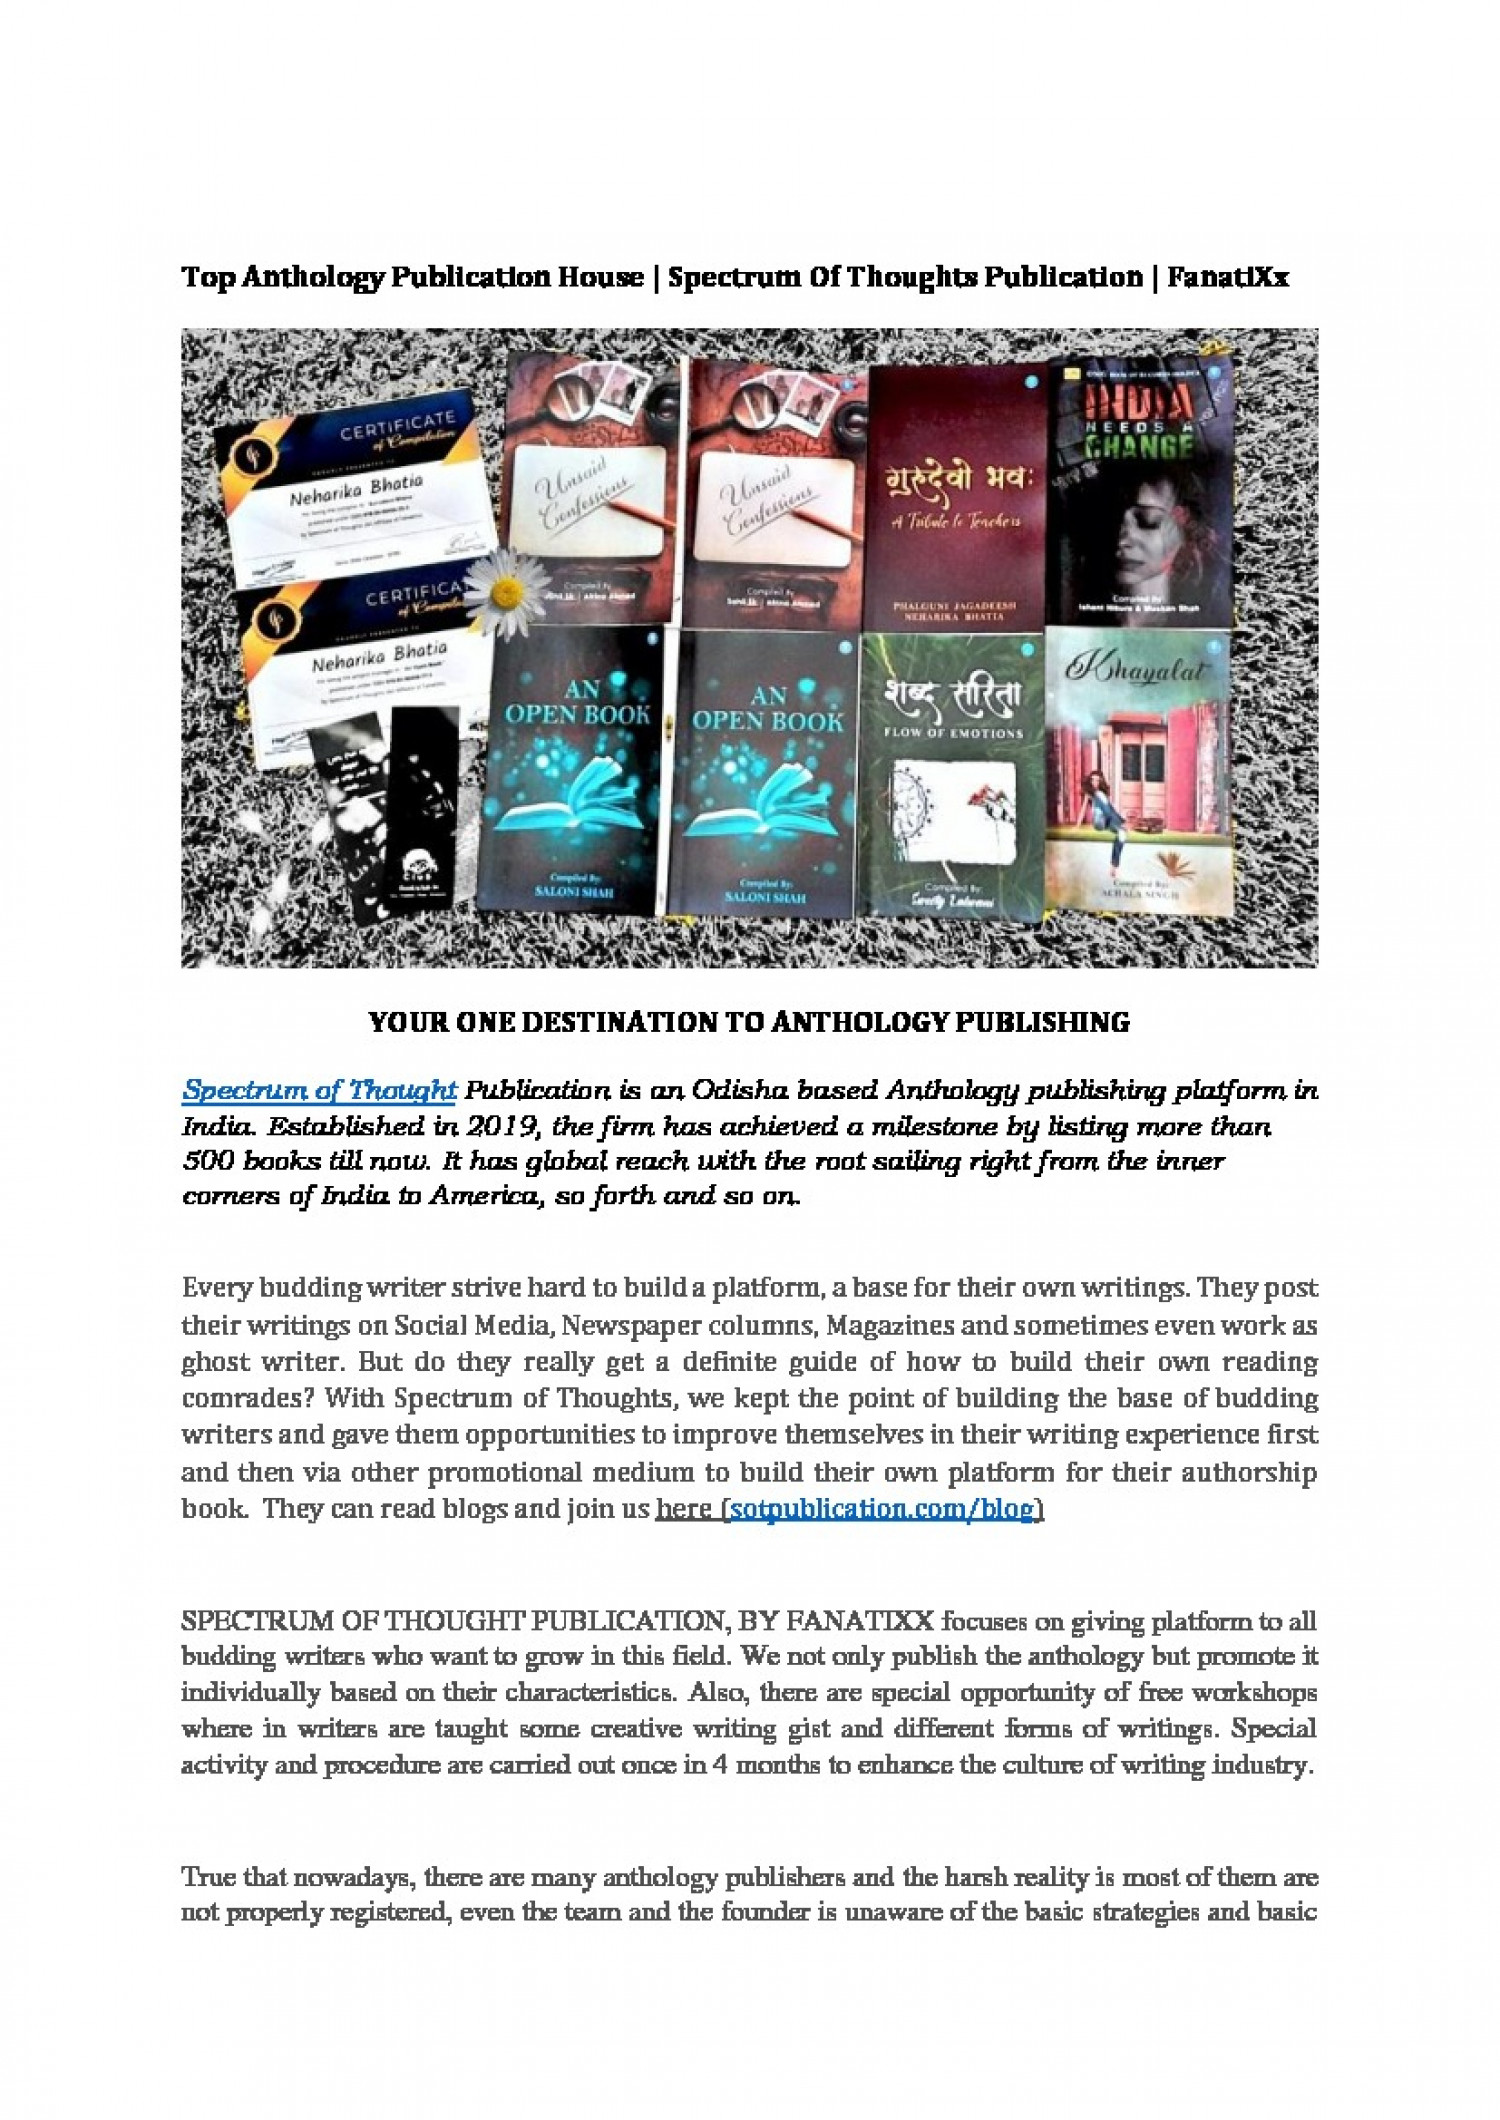 Top Anthology Publication House | Spectrum Of  Thoughts Publication | FanatiXx Infographic